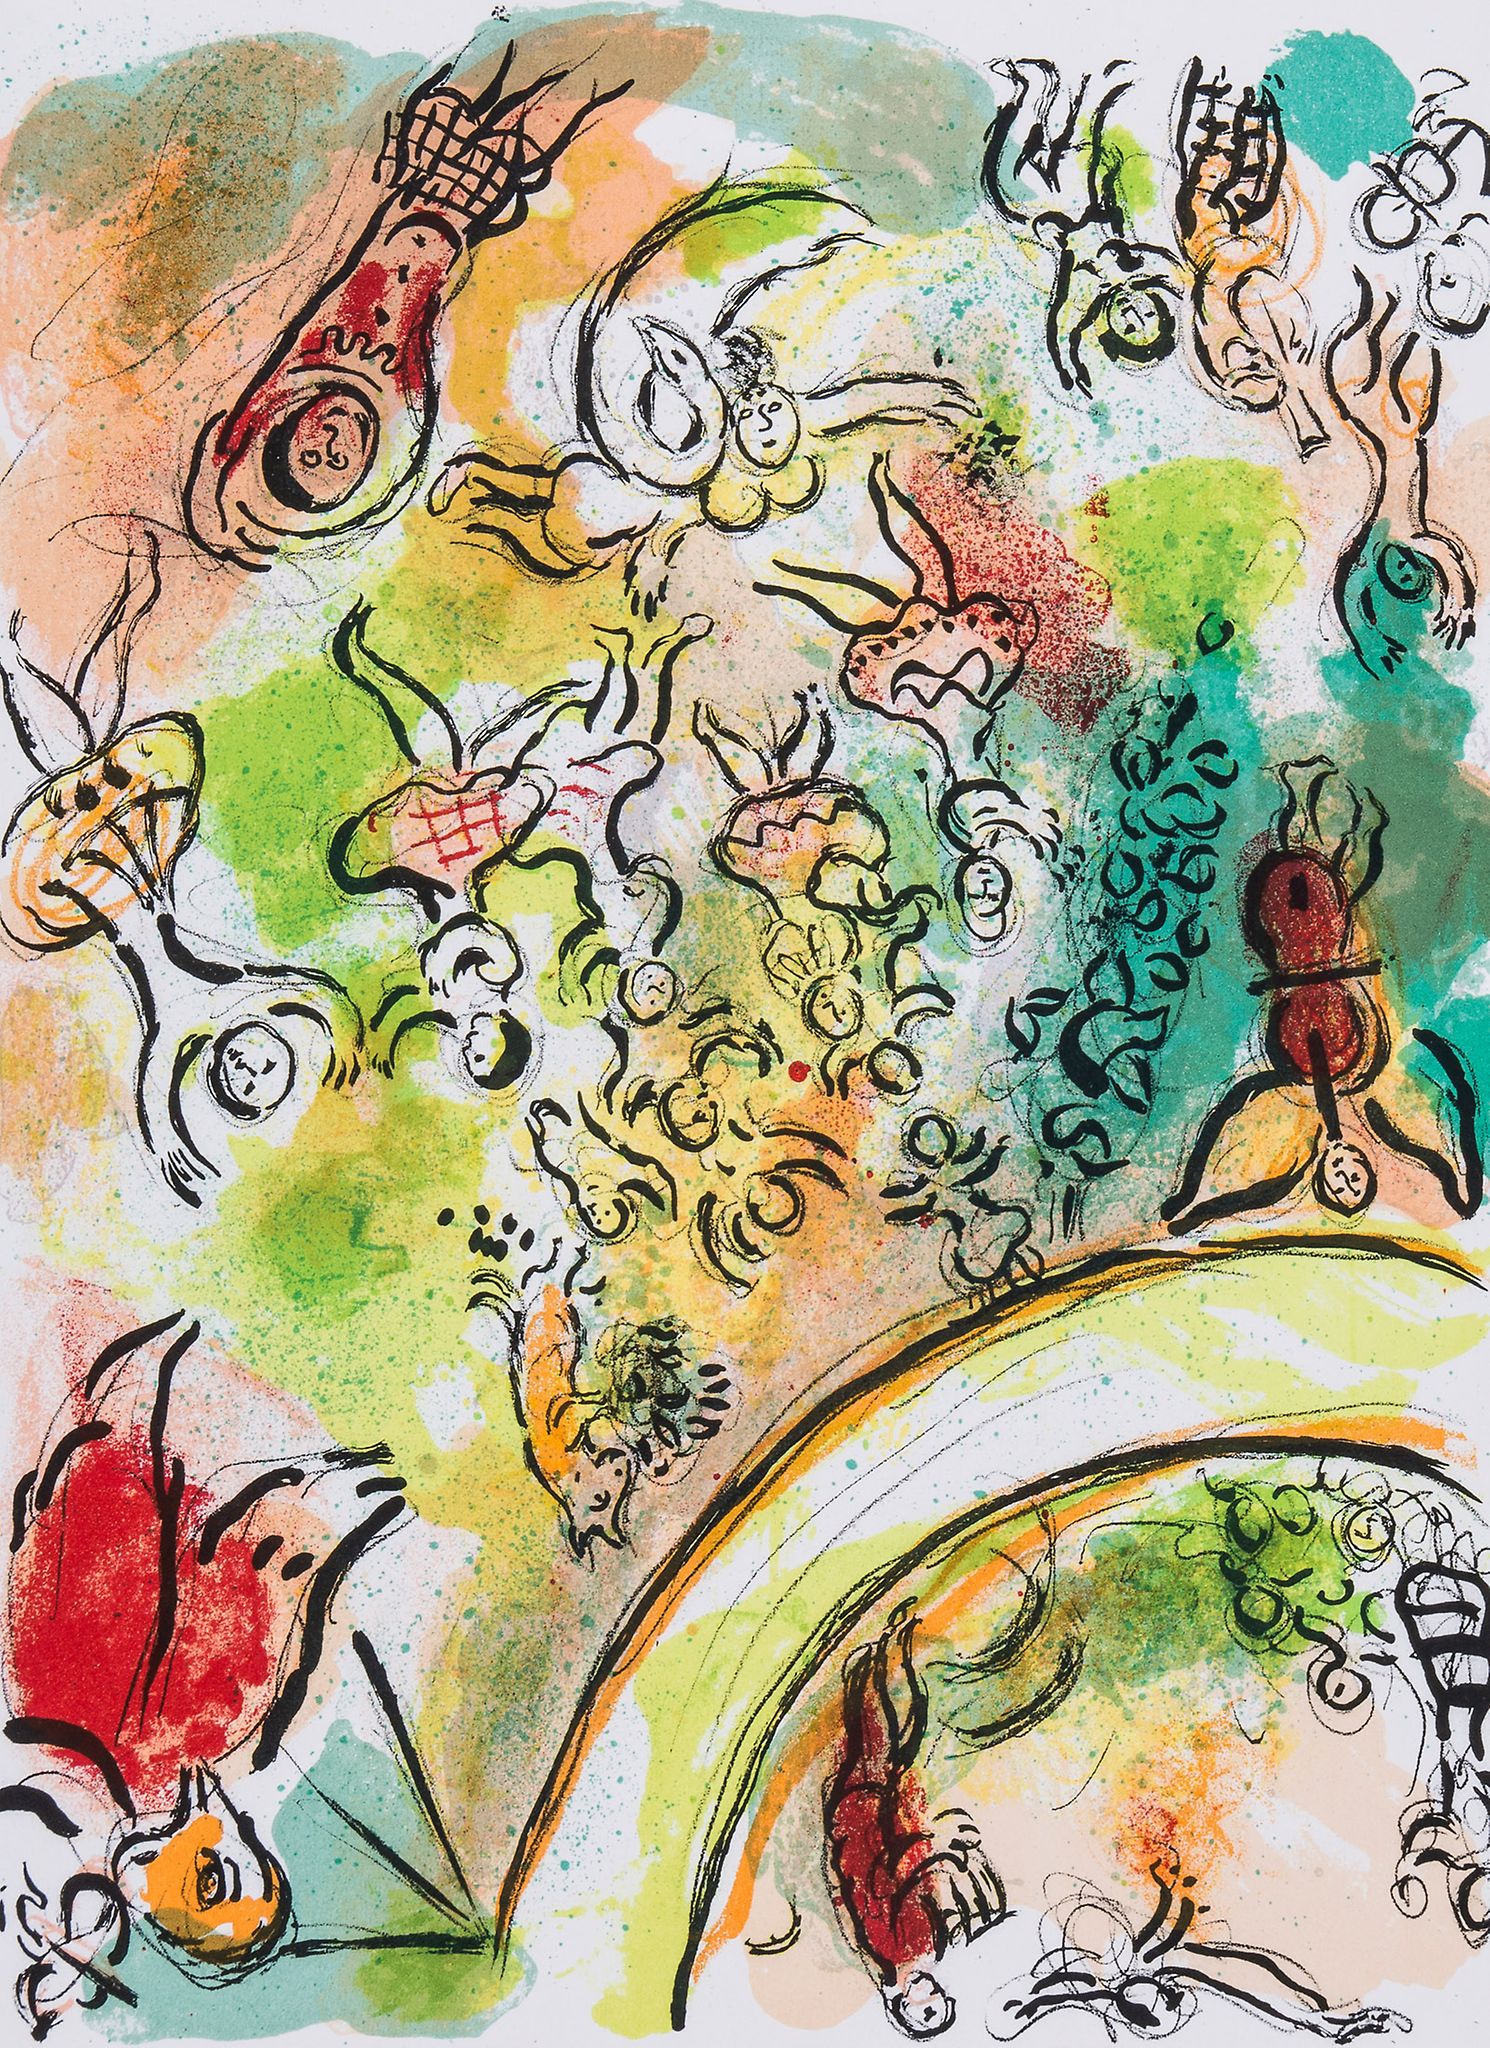 Marc Chagall (1887-1985) - Le Plafond de l'Opéra de Paris the book, 1965, comprising circa 12